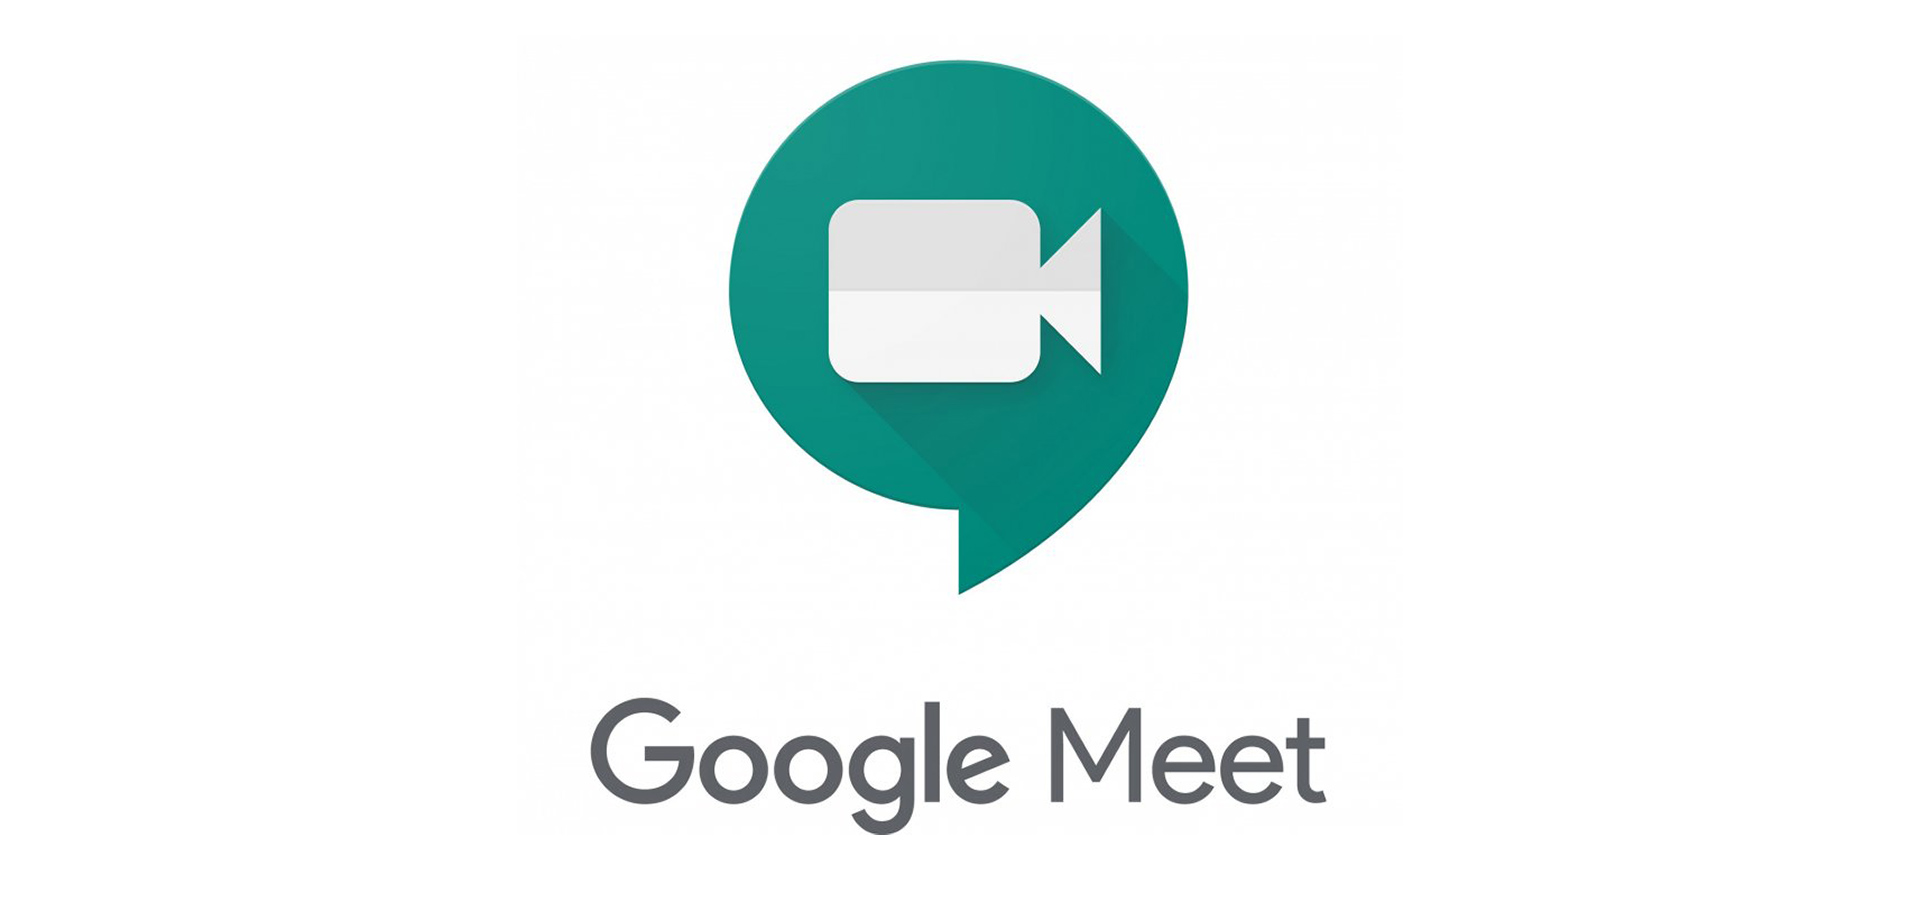 Google meet .com